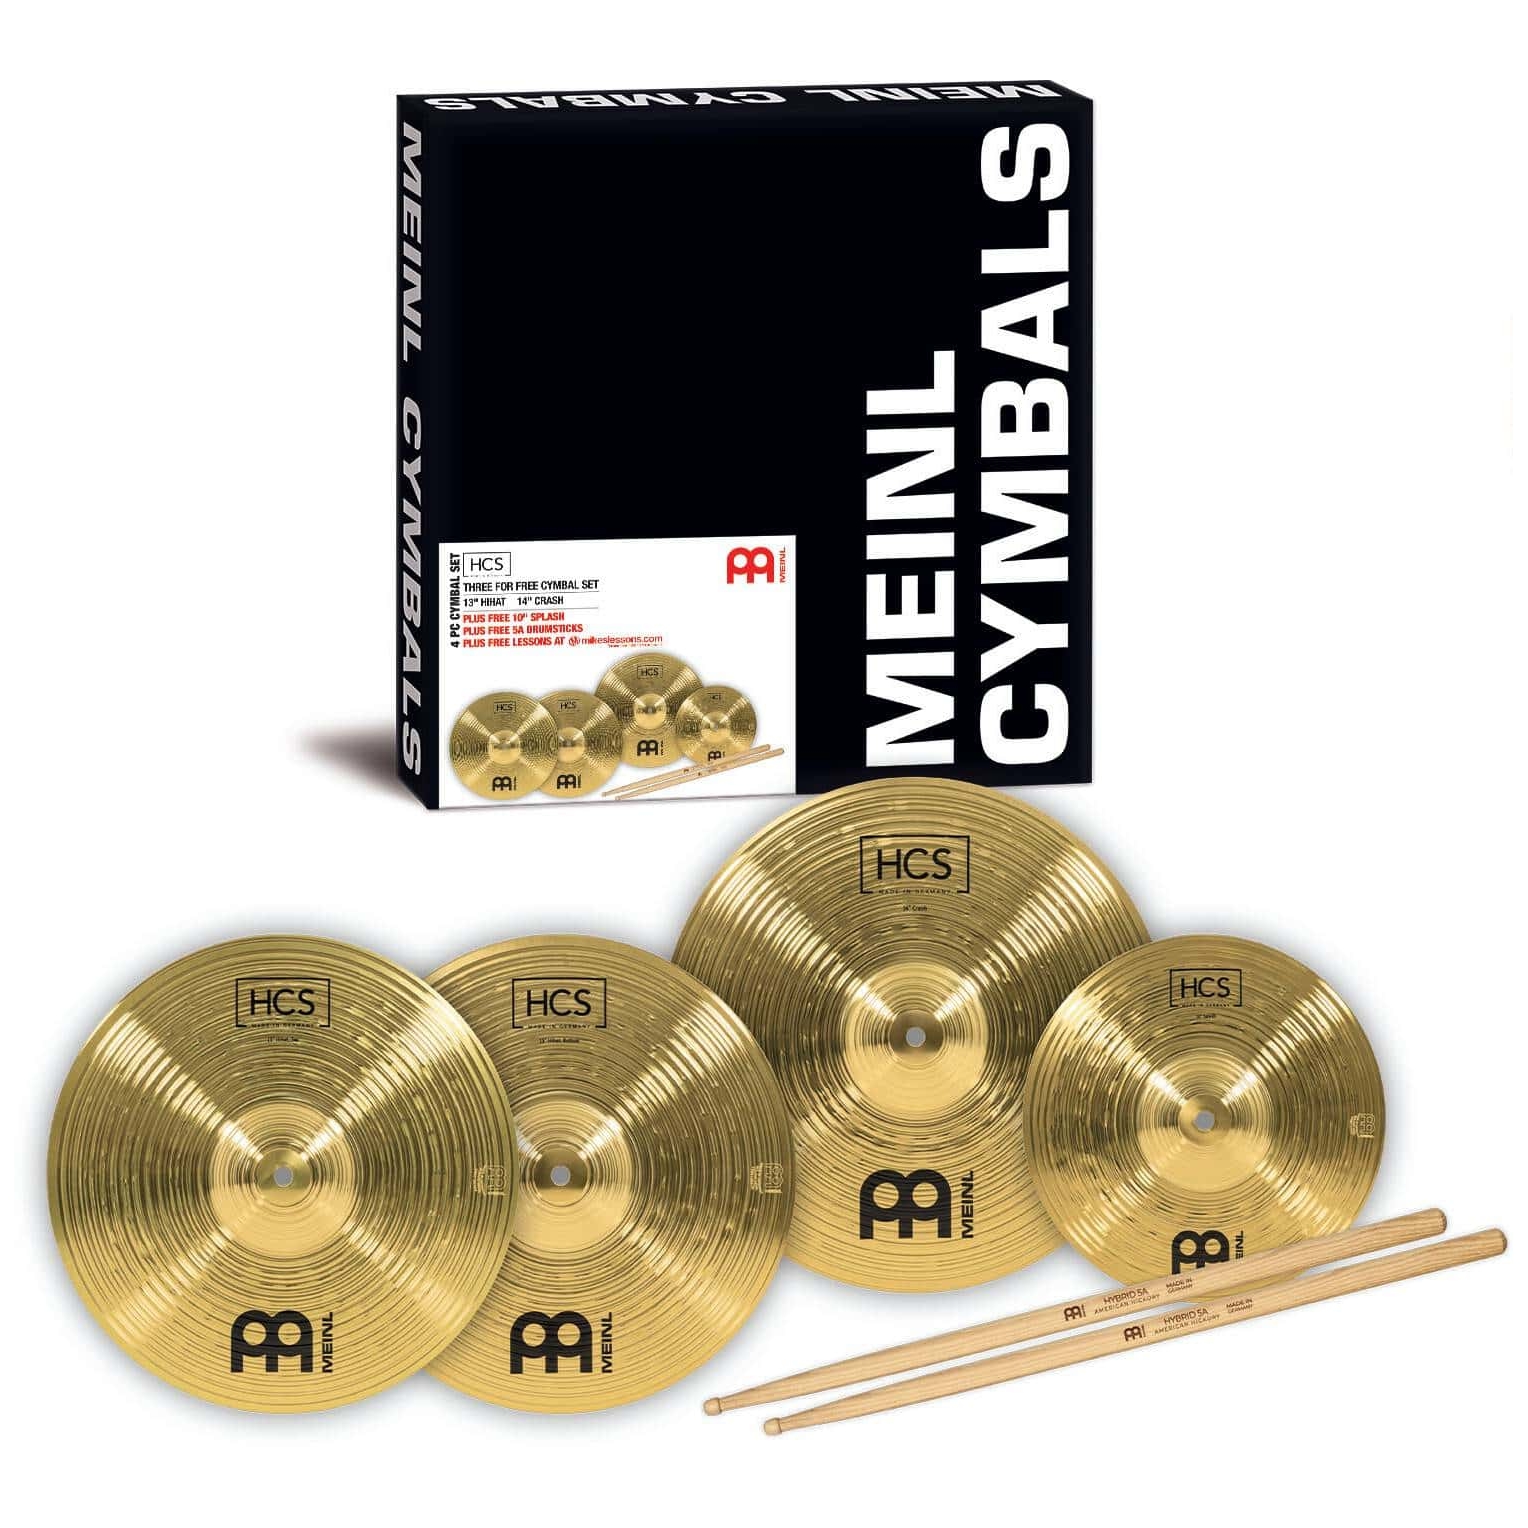 Meinl Cymbals HCS1314+10S - HCS Cymbal Set + free 10" Splash + free Drumsticks 